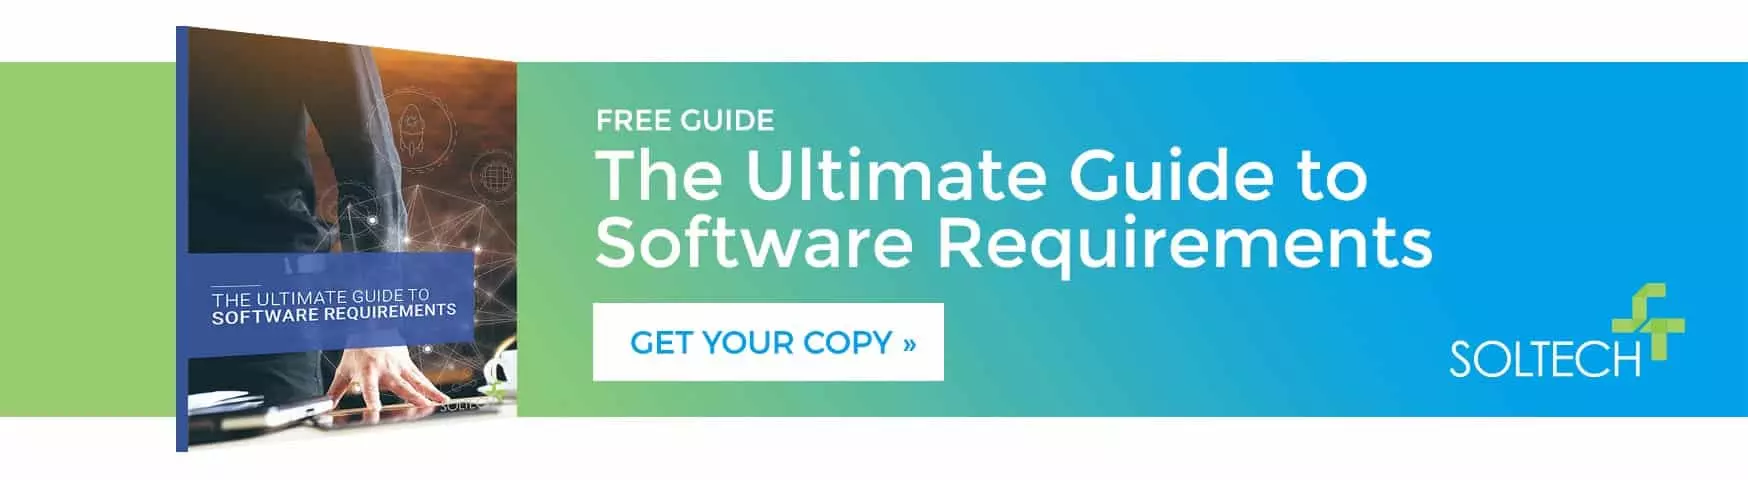 ebook-software-requirements-wide